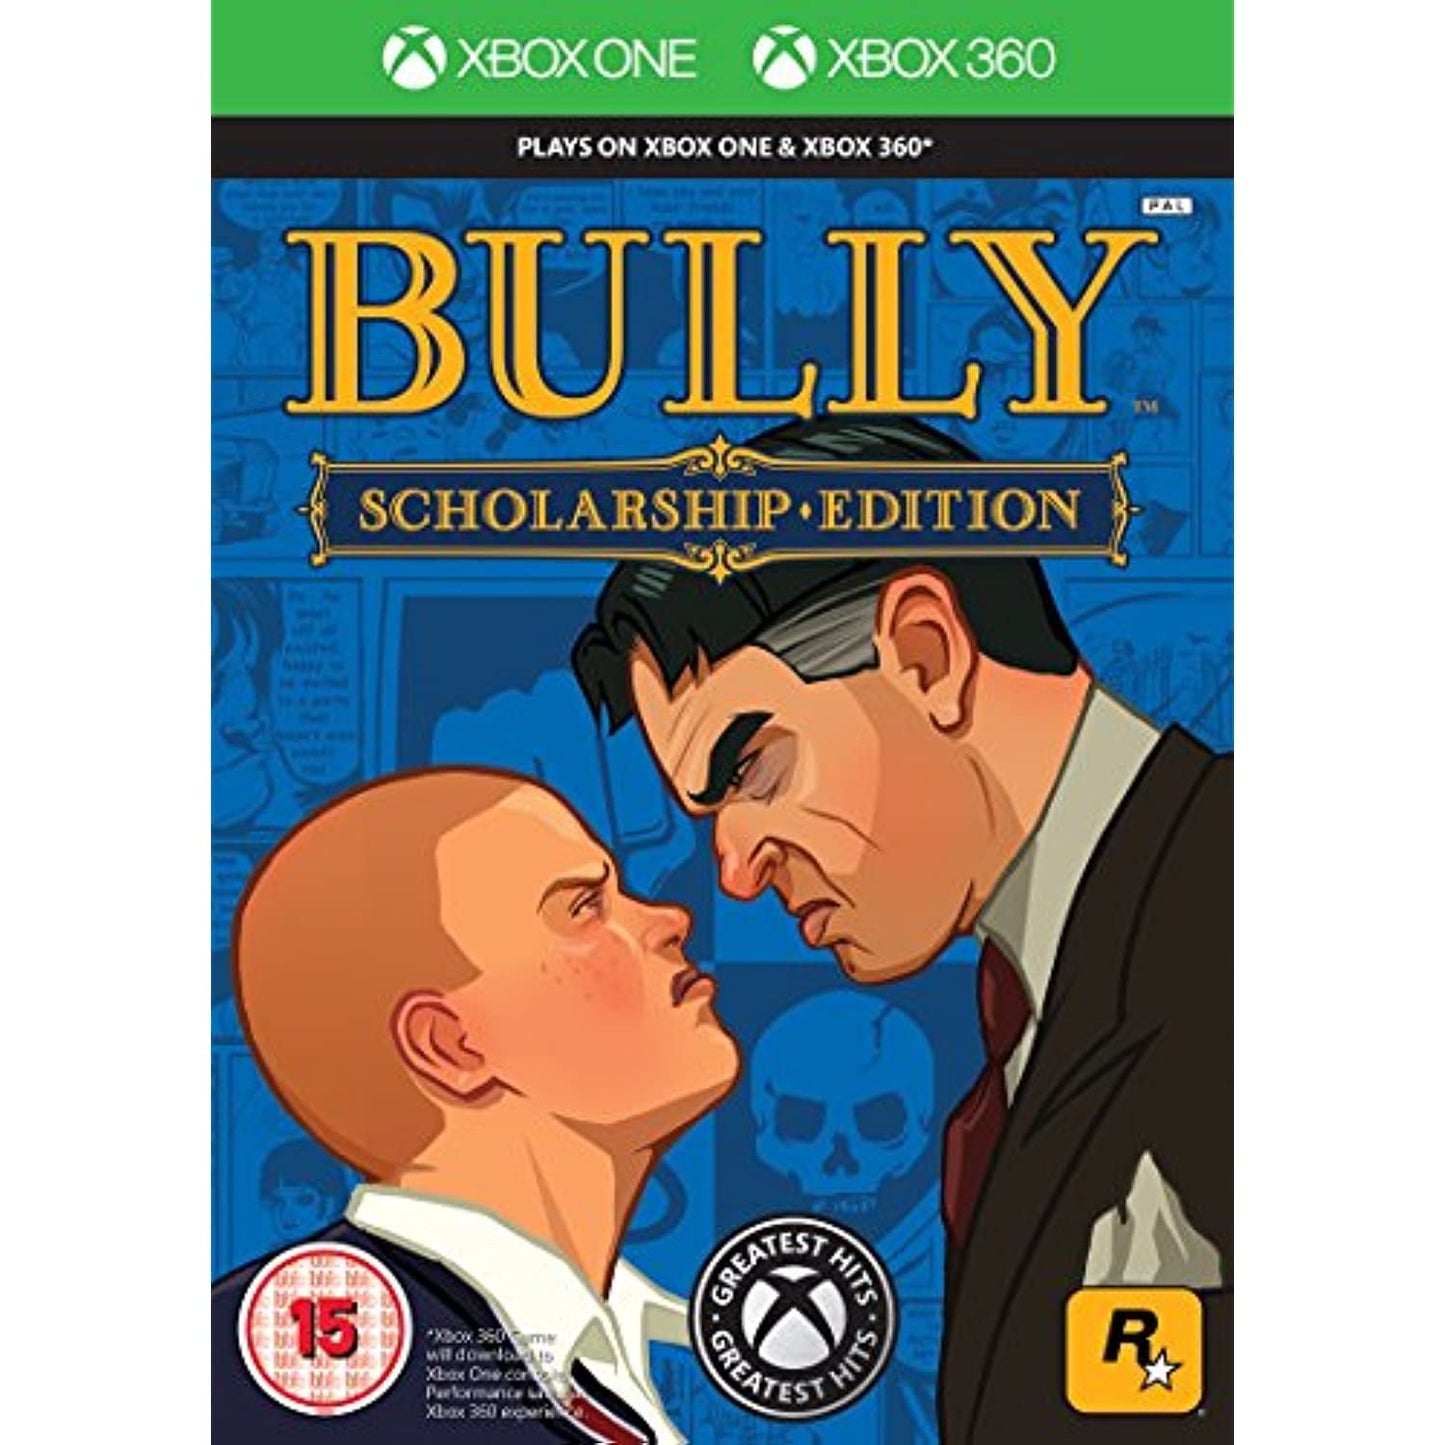 Bully: Scholarship Edition - Xbox 360 (CIB)